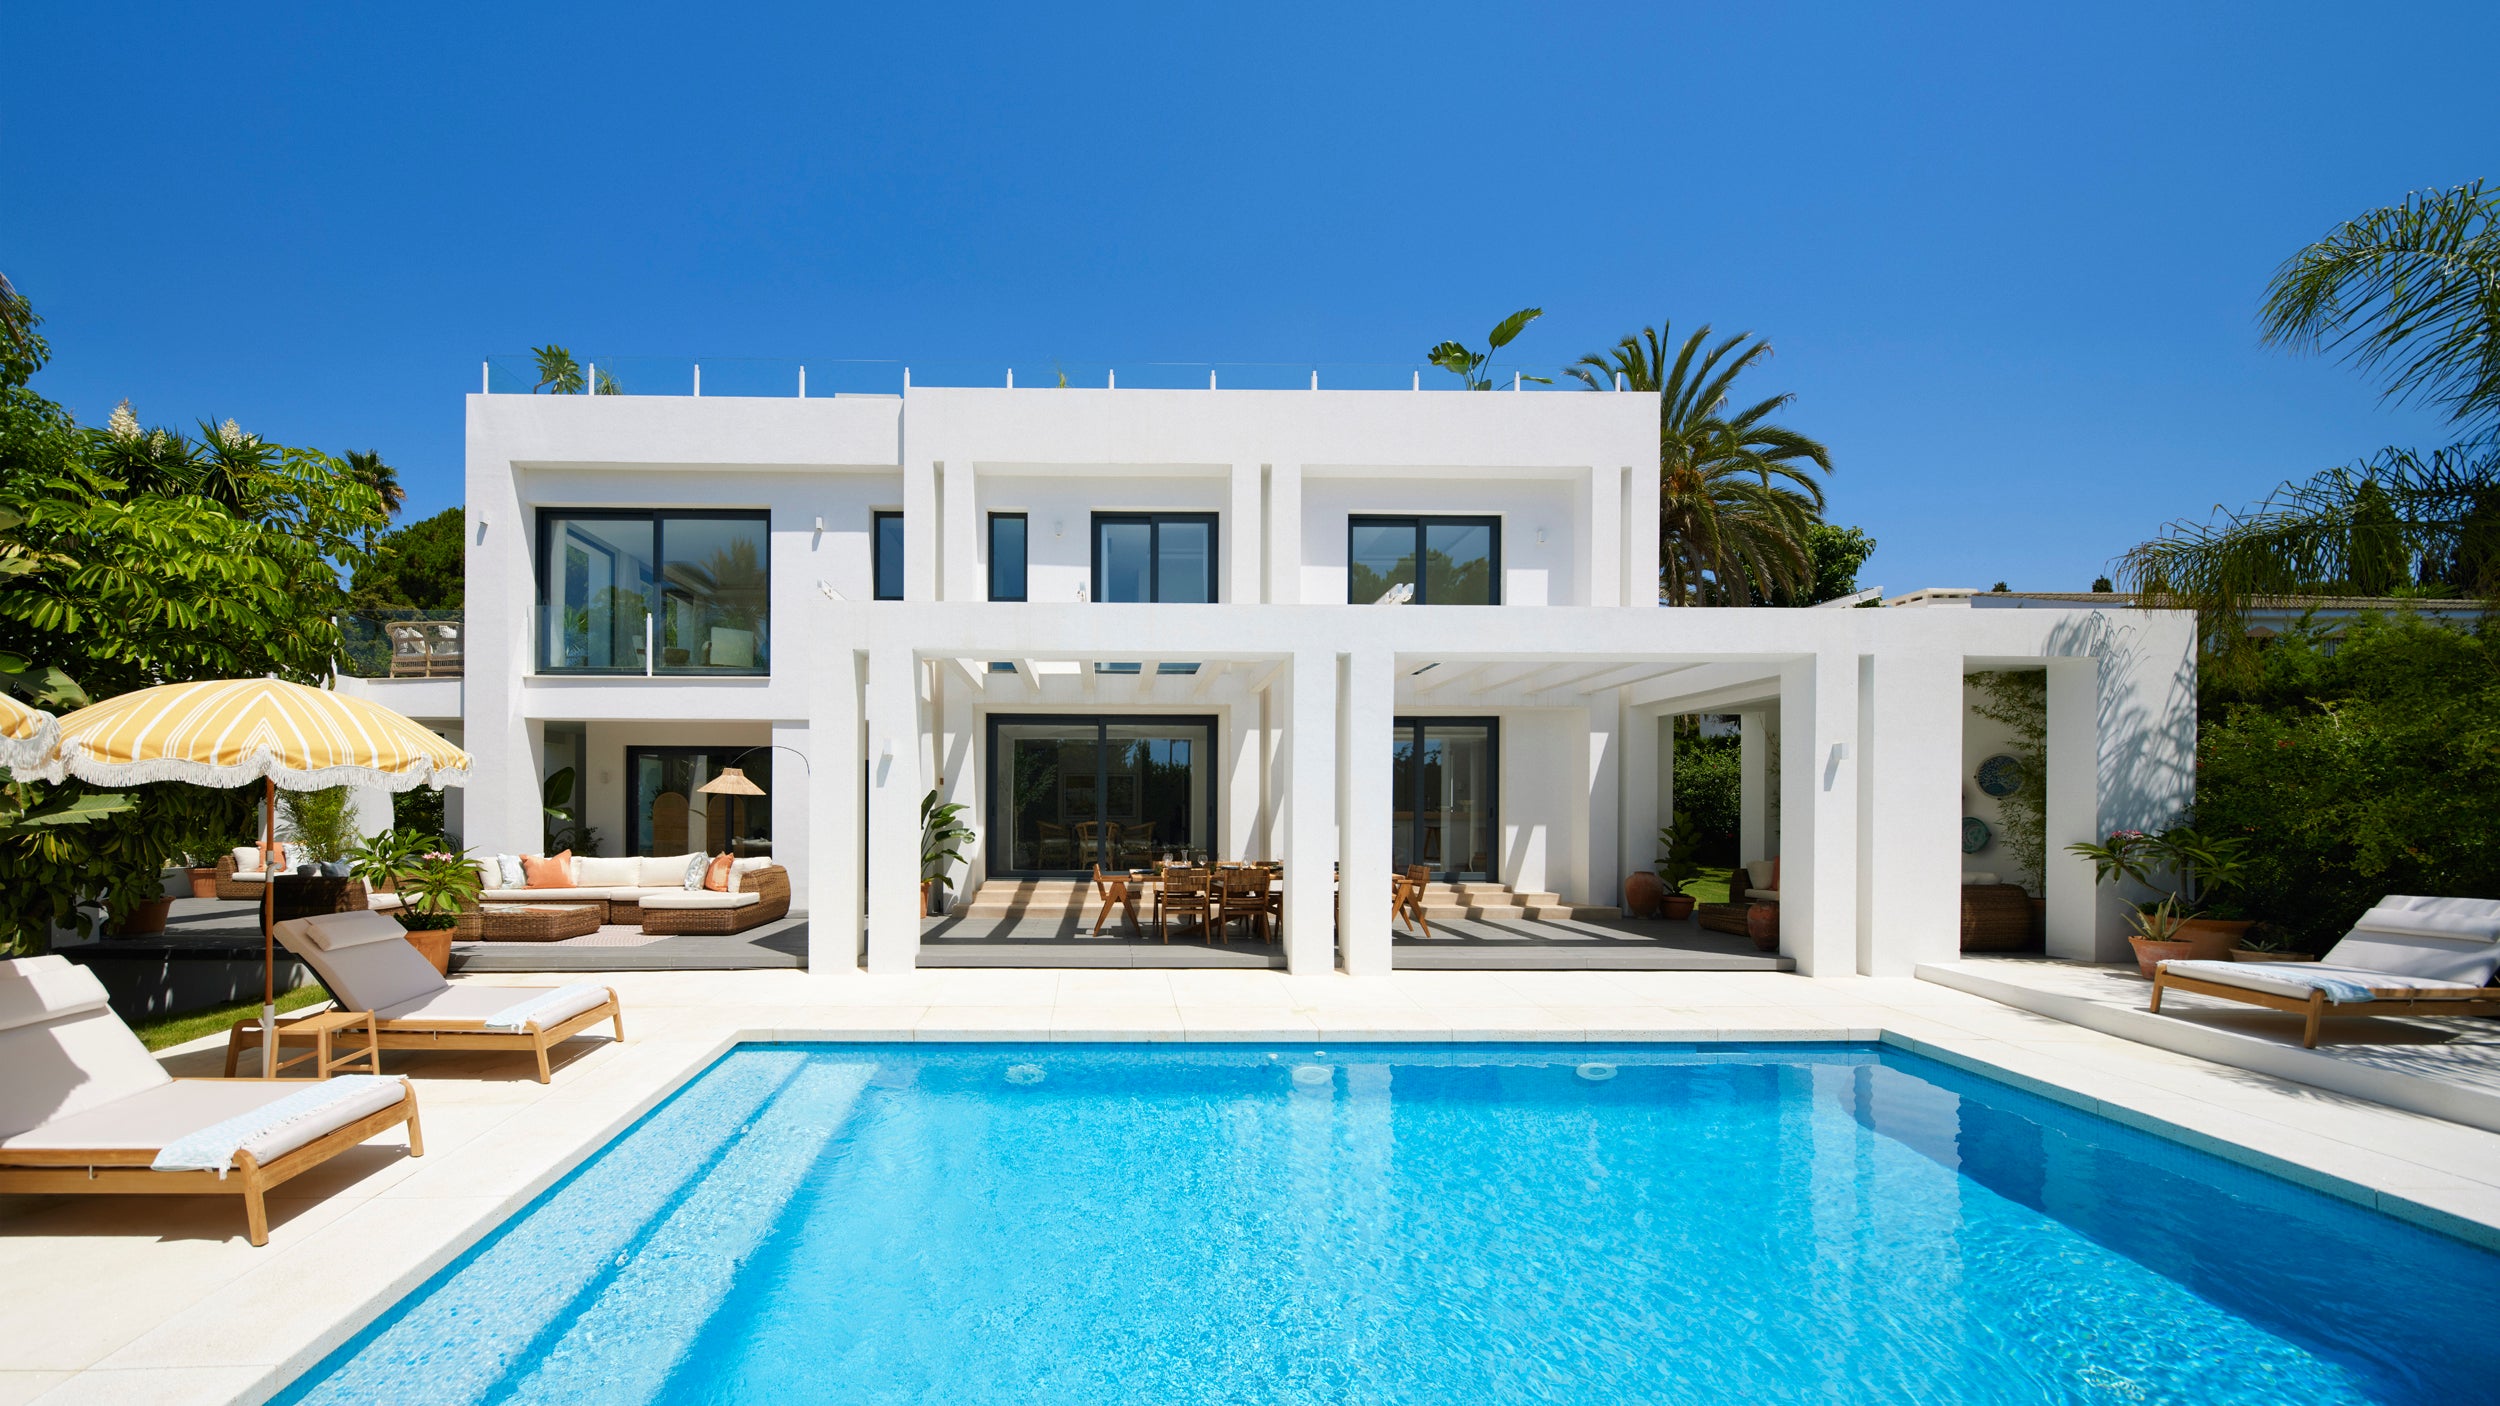 Marbella Omaze Superdraw - the villas from outside in the sun